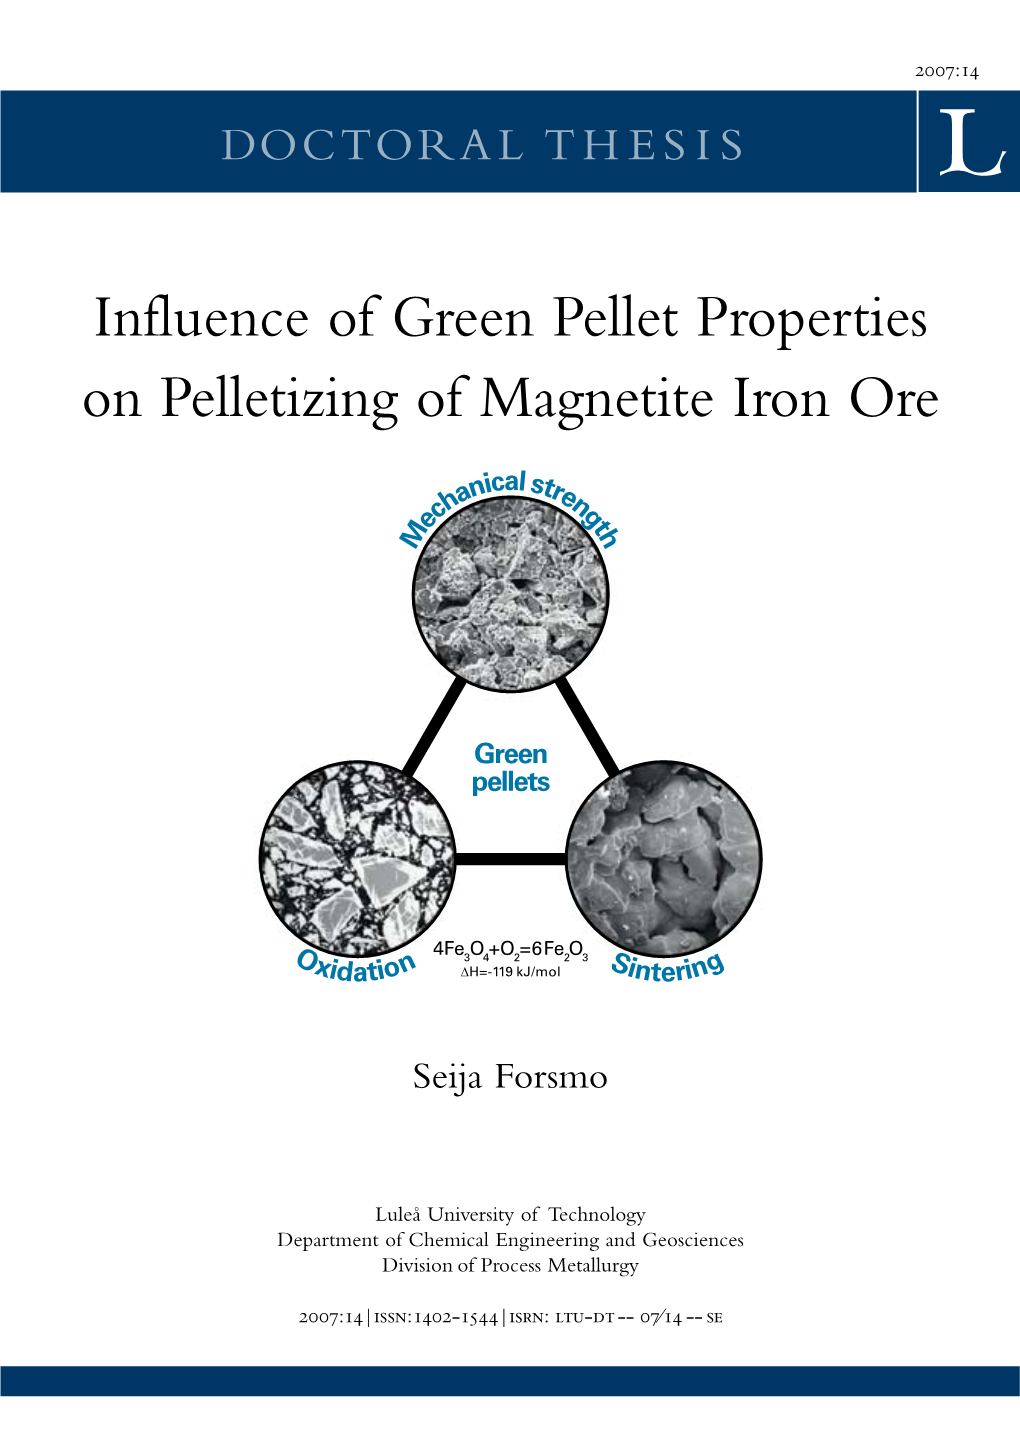 Influence of Green Pellet Properties on Pelletizing of Magnetite Iron Ore